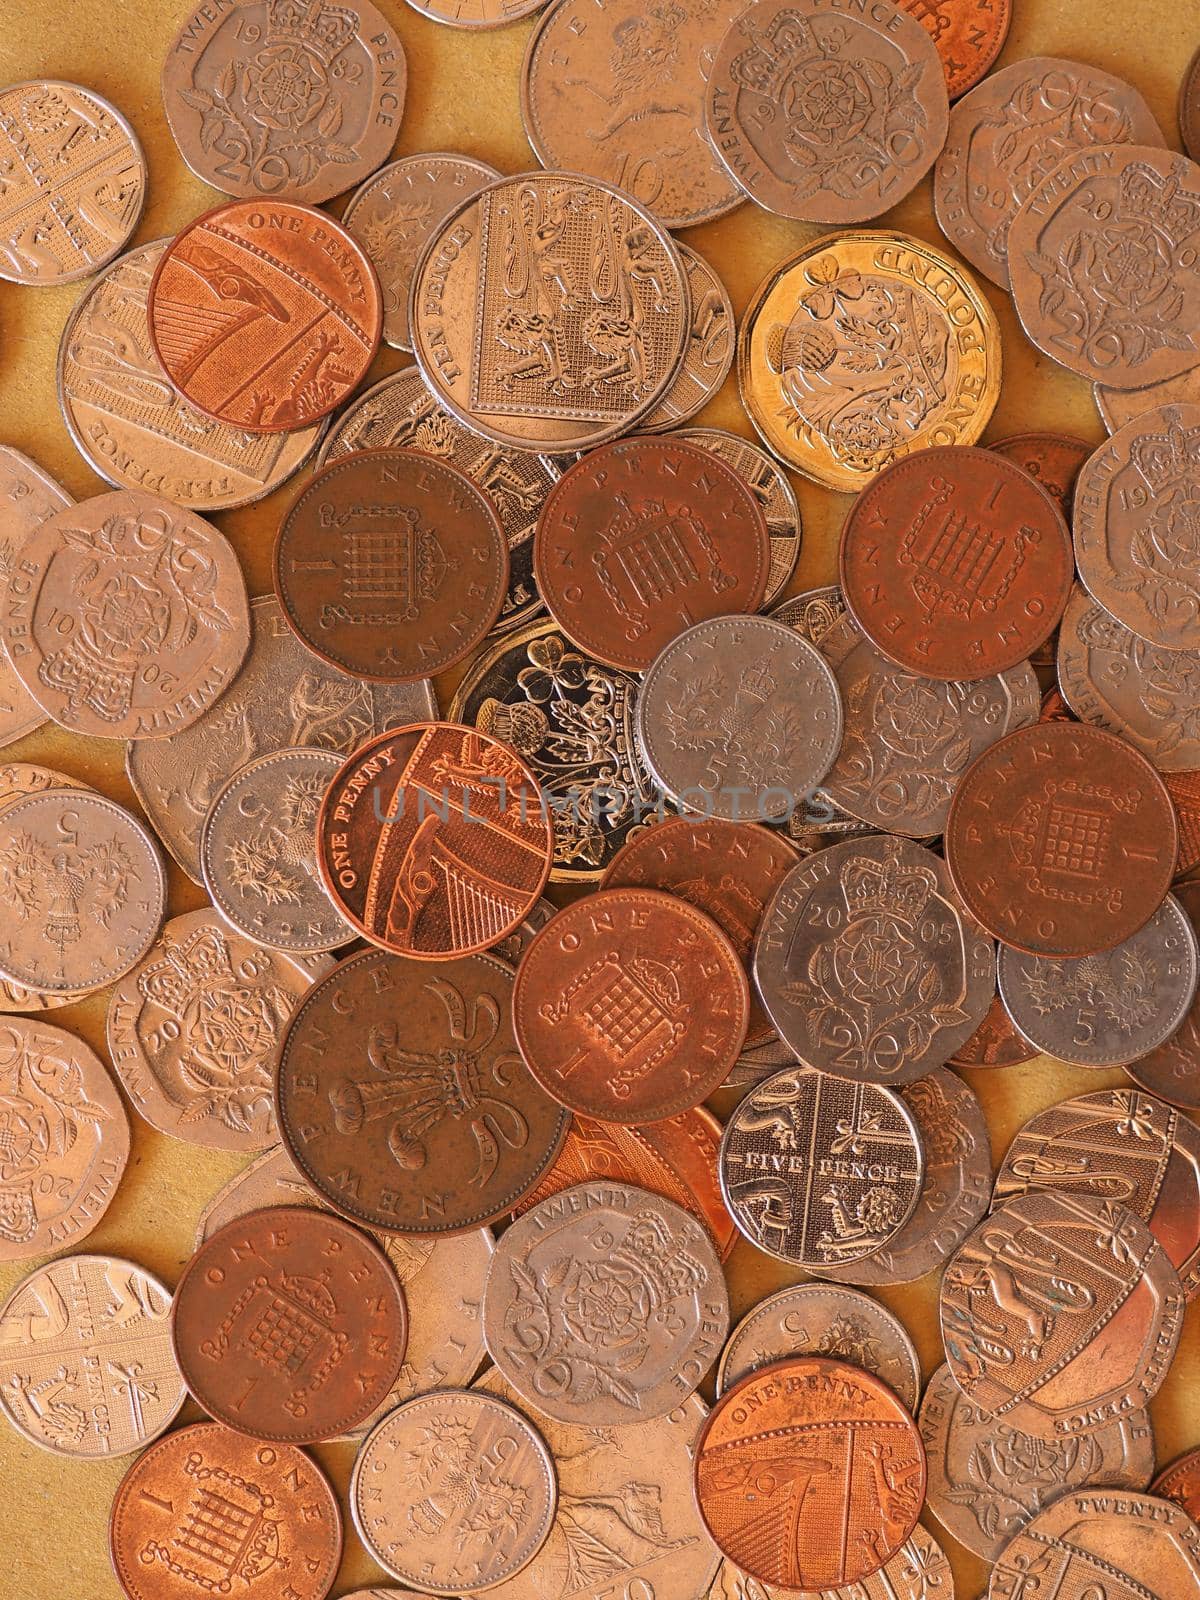 Pound coins, United Kingdom by claudiodivizia